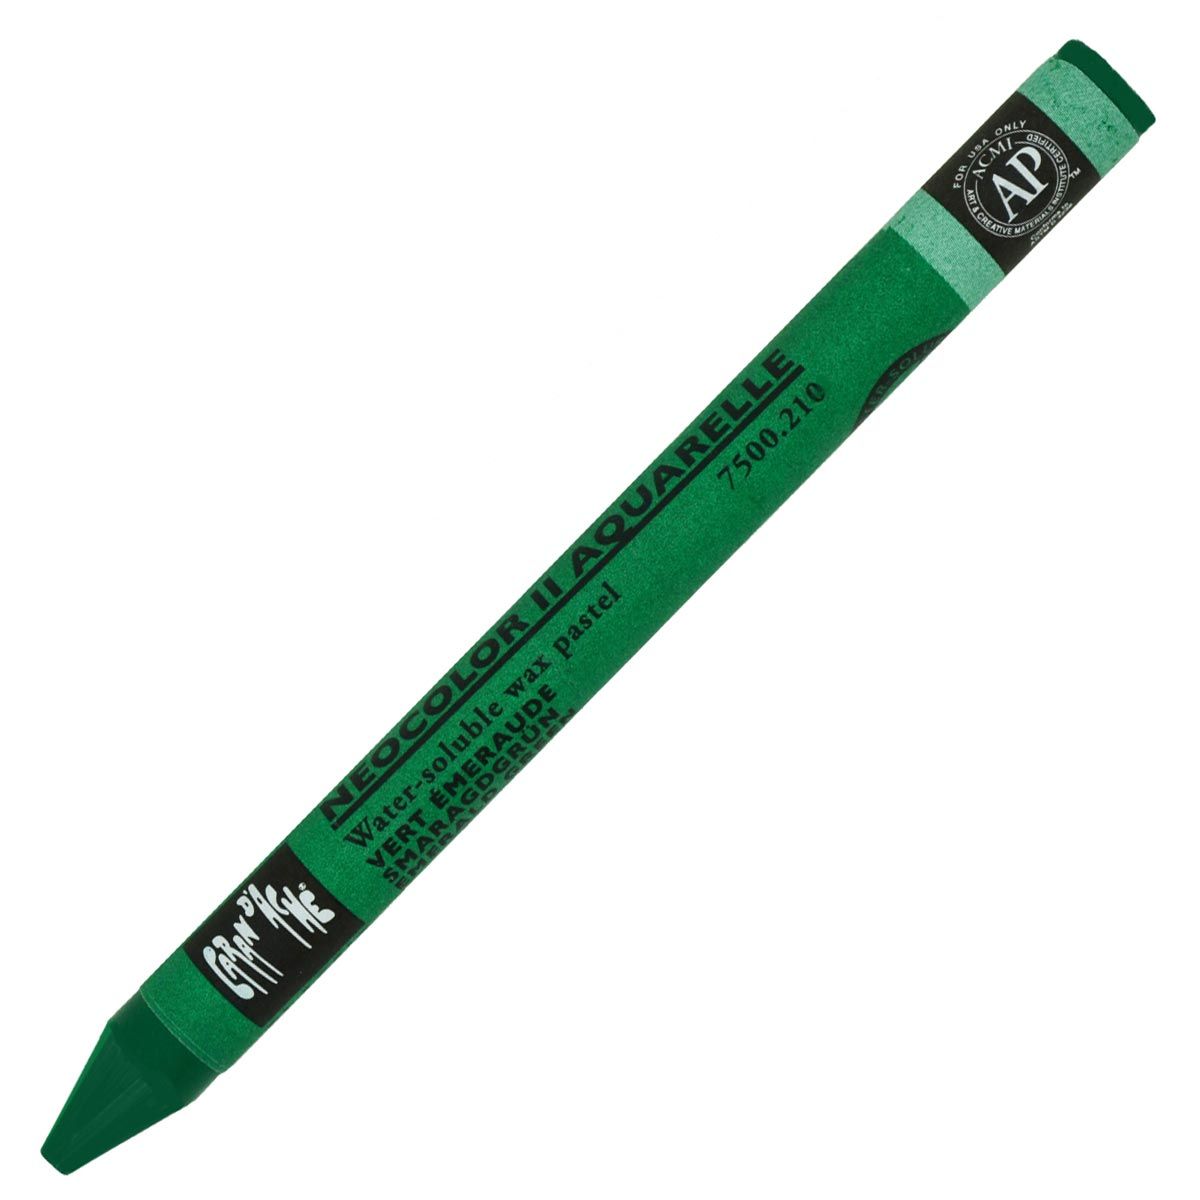 Neocolor II Aquarelle Artists’ Crayon - Emerald Green 210